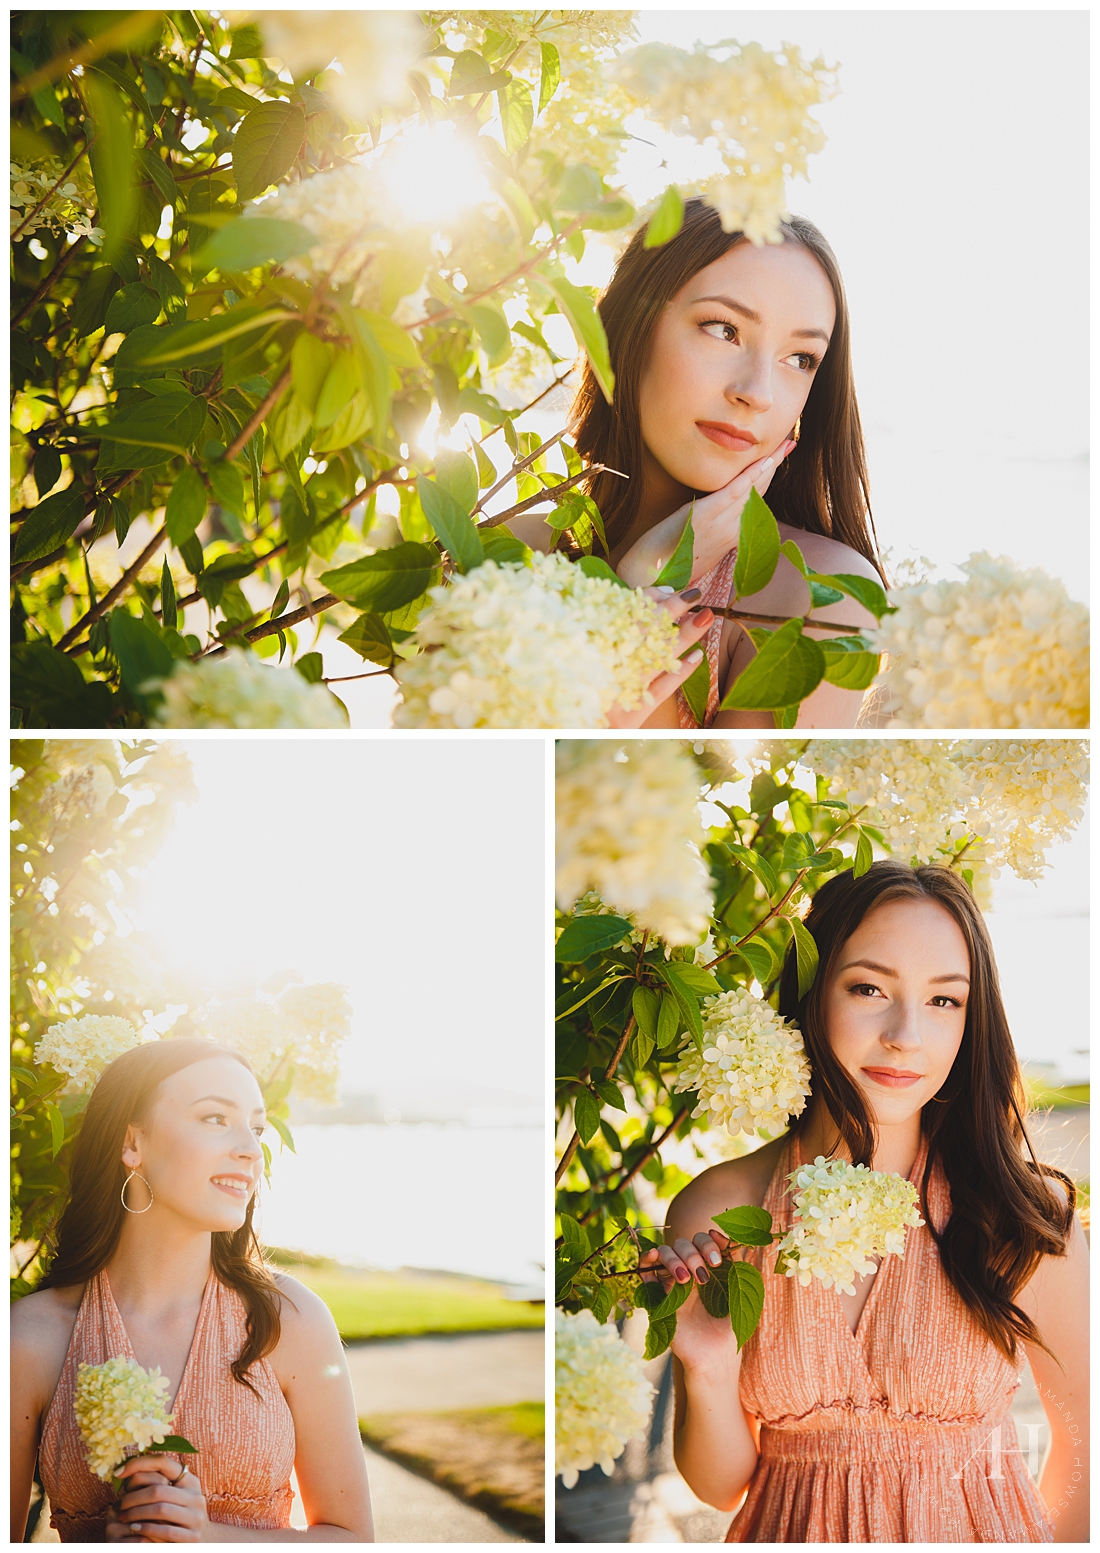 Senior Portraits with Hydrangeas | Golden Light for Senior Photos, Pose Ideas for High School Senior Girls | Photographed by the Best Tacoma Senior Photographer Amanda Howse Photography